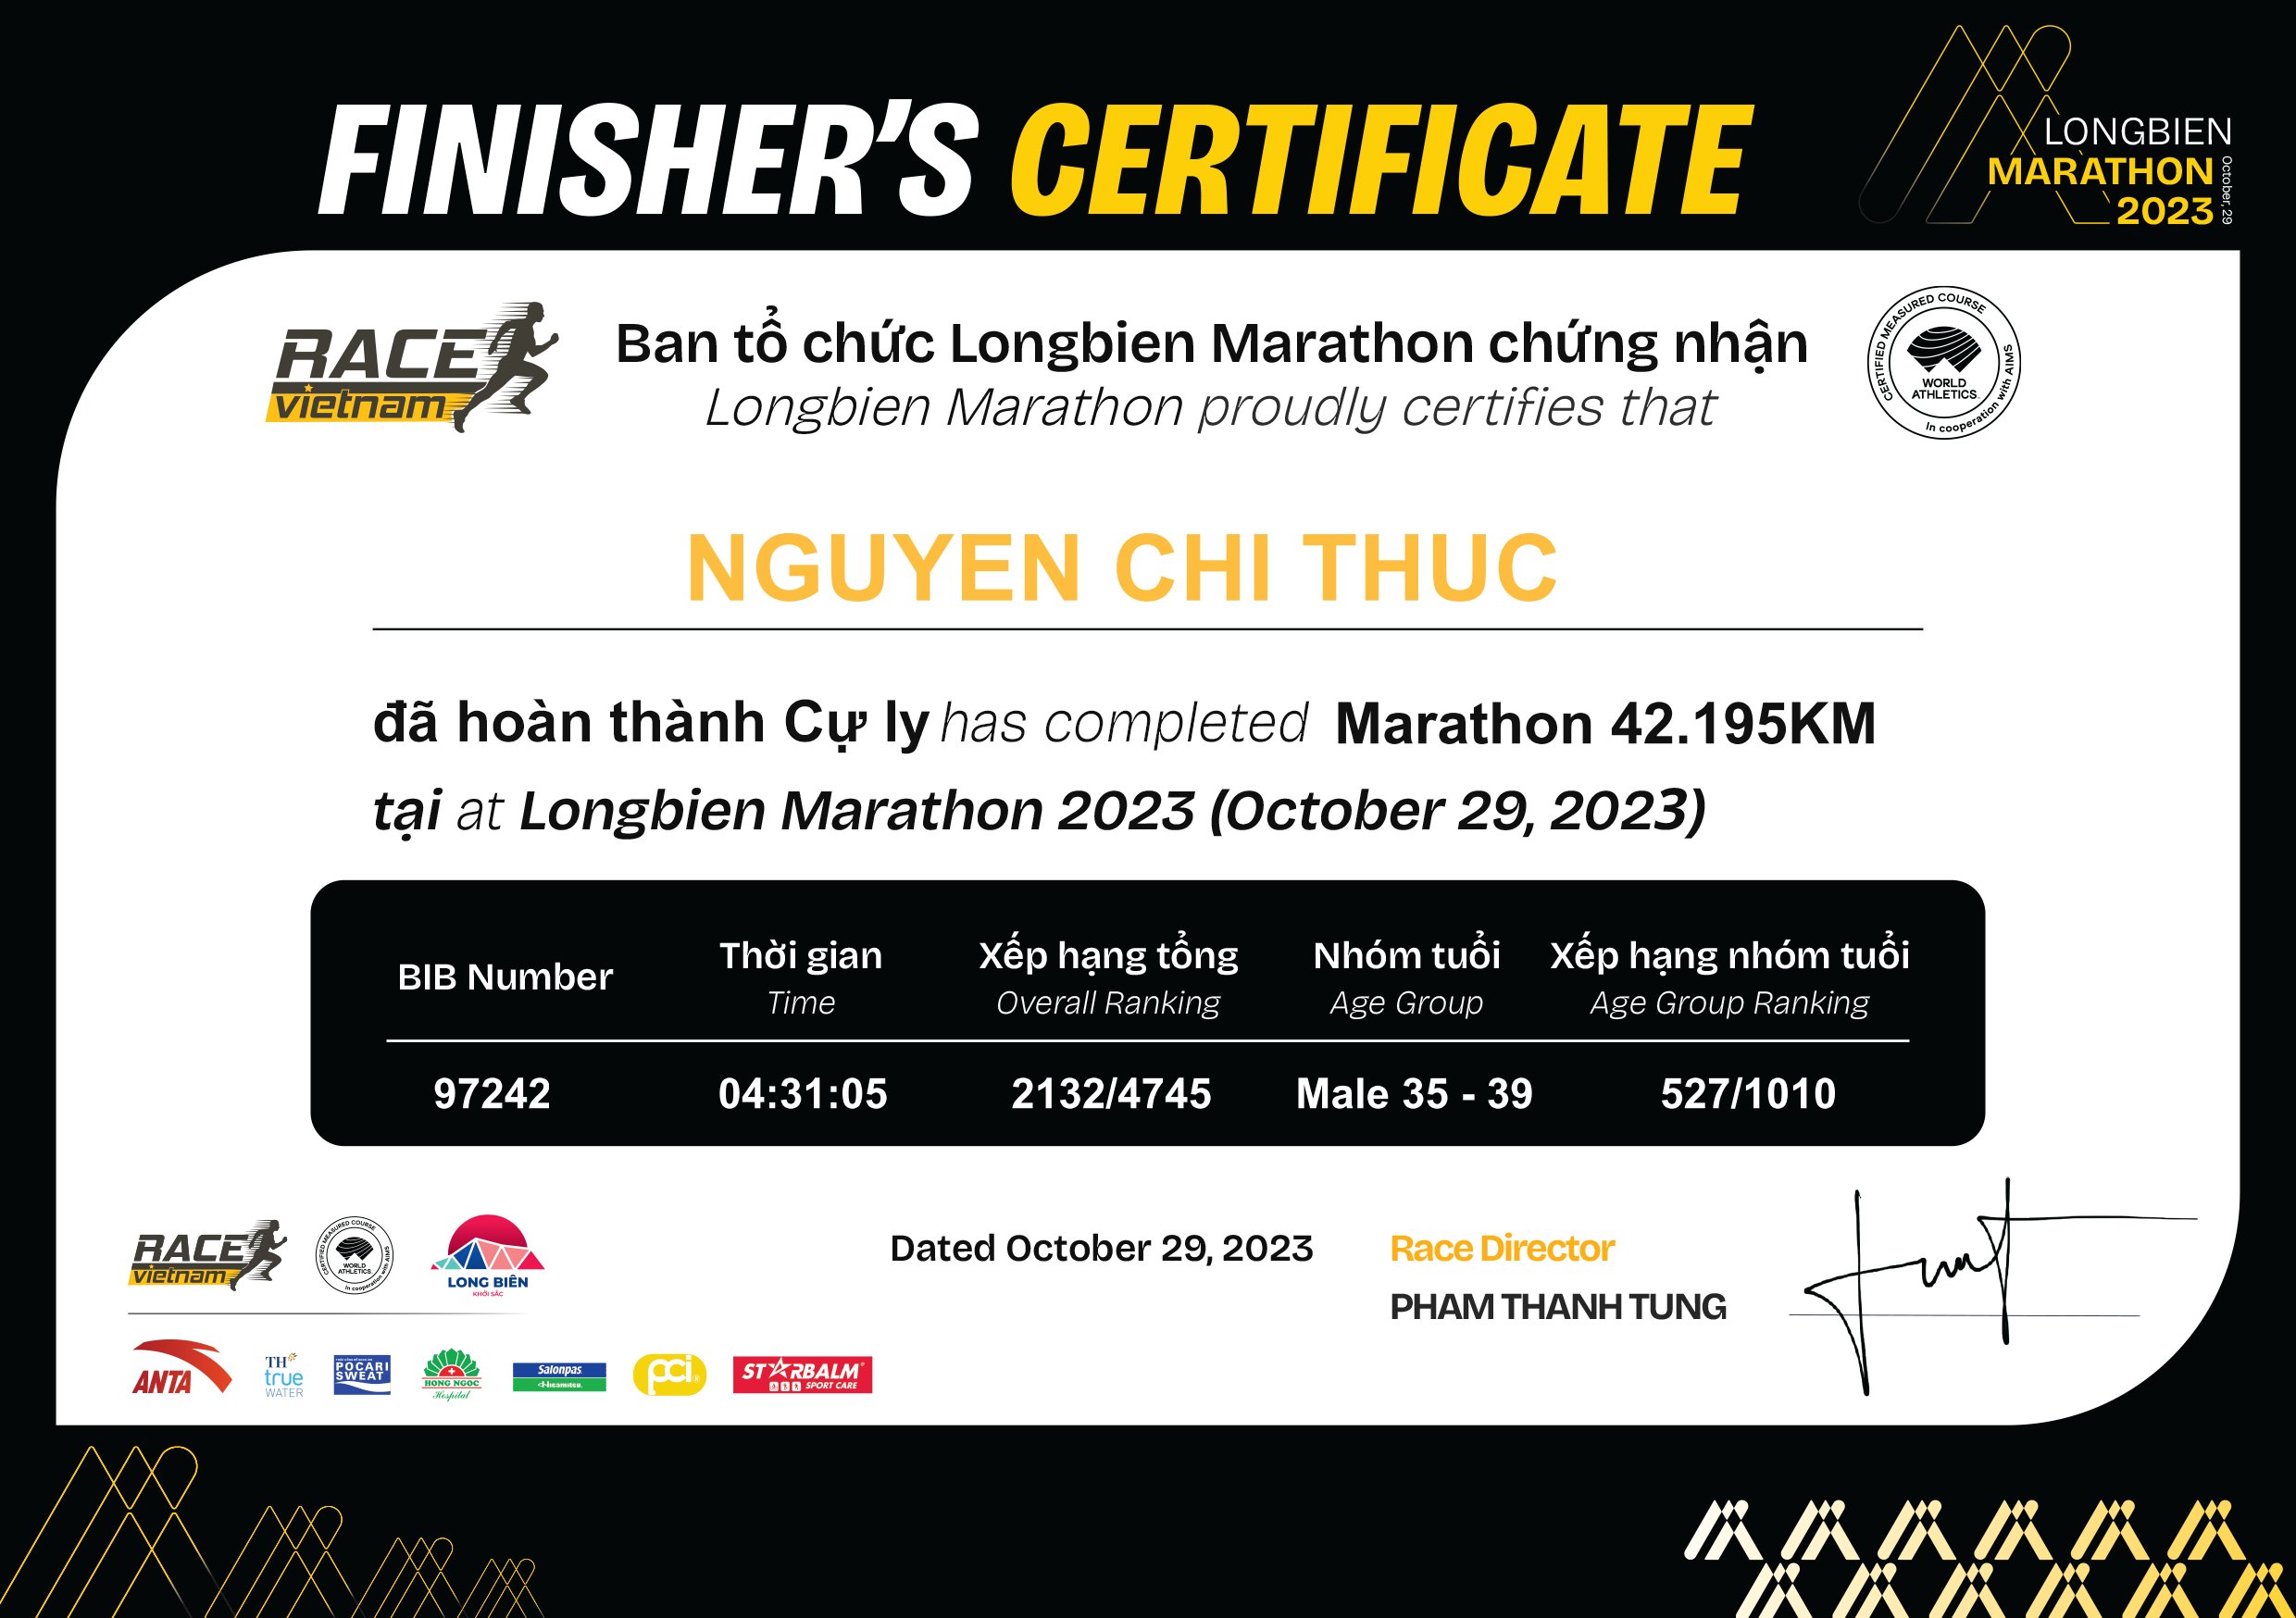 97242 - Nguyen Chi Thuc